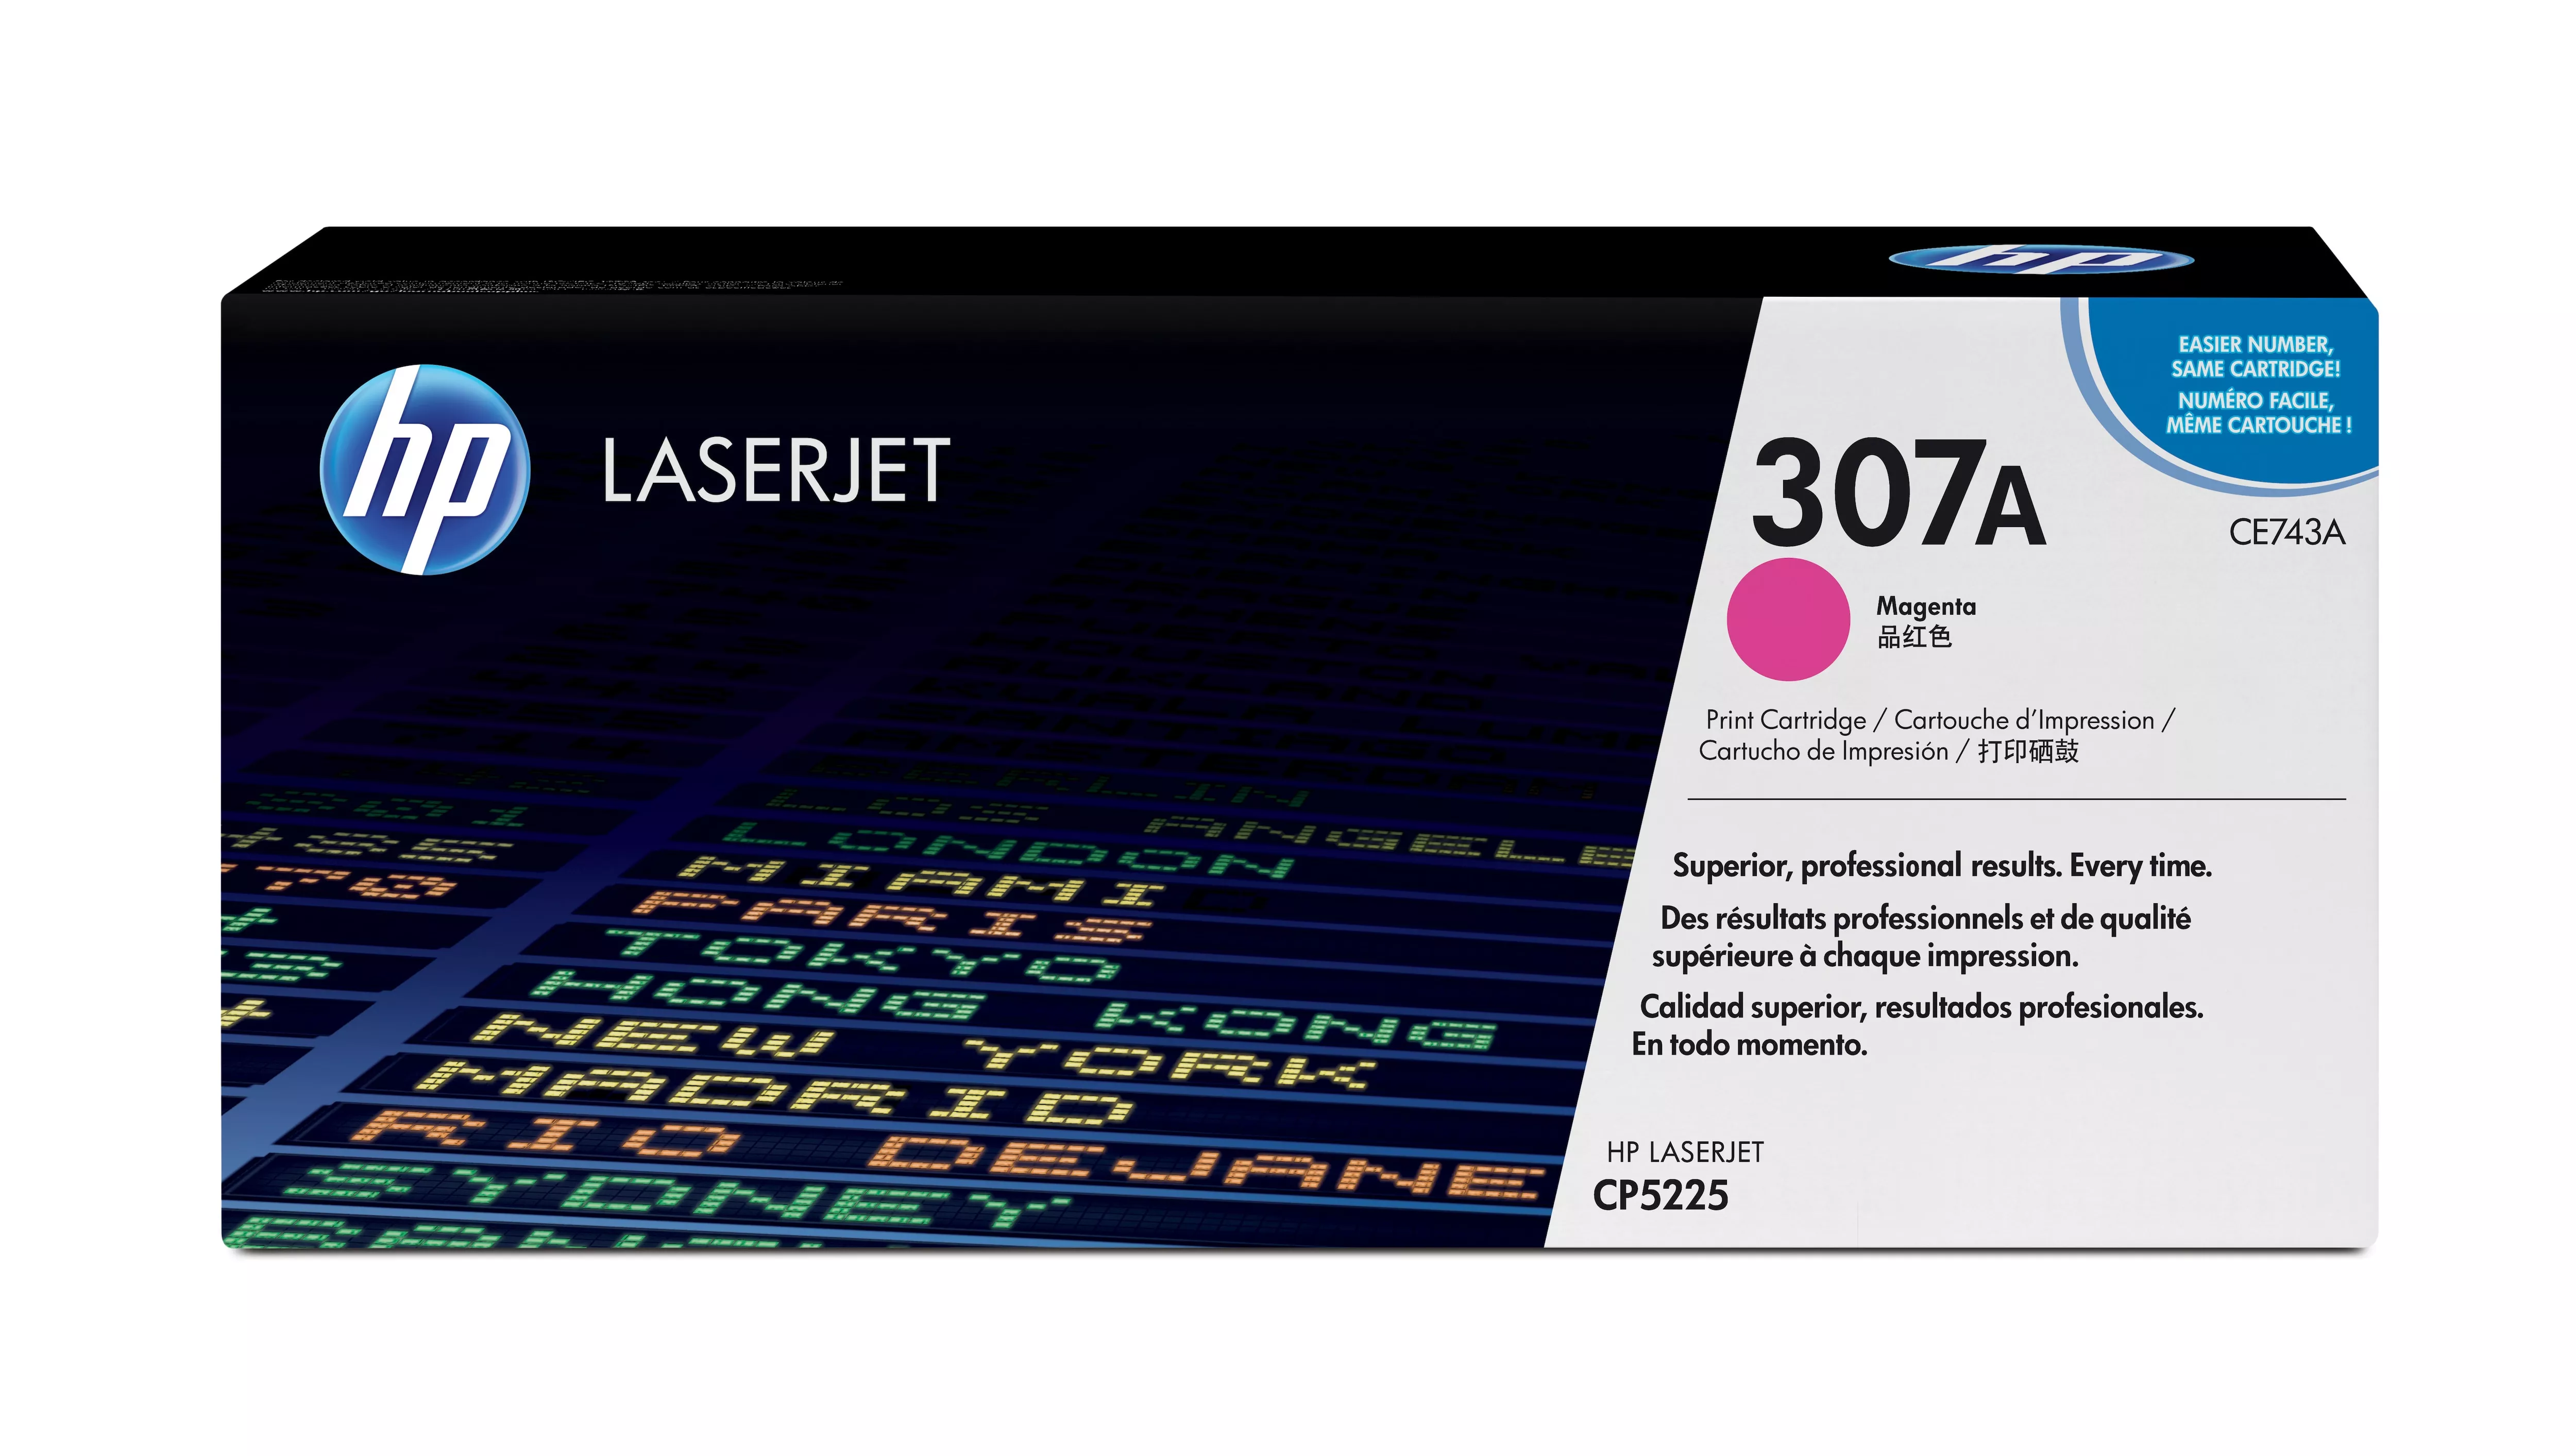 Vente HP original Colour LaserJet CE743A Toner cartridge magenta au meilleur prix